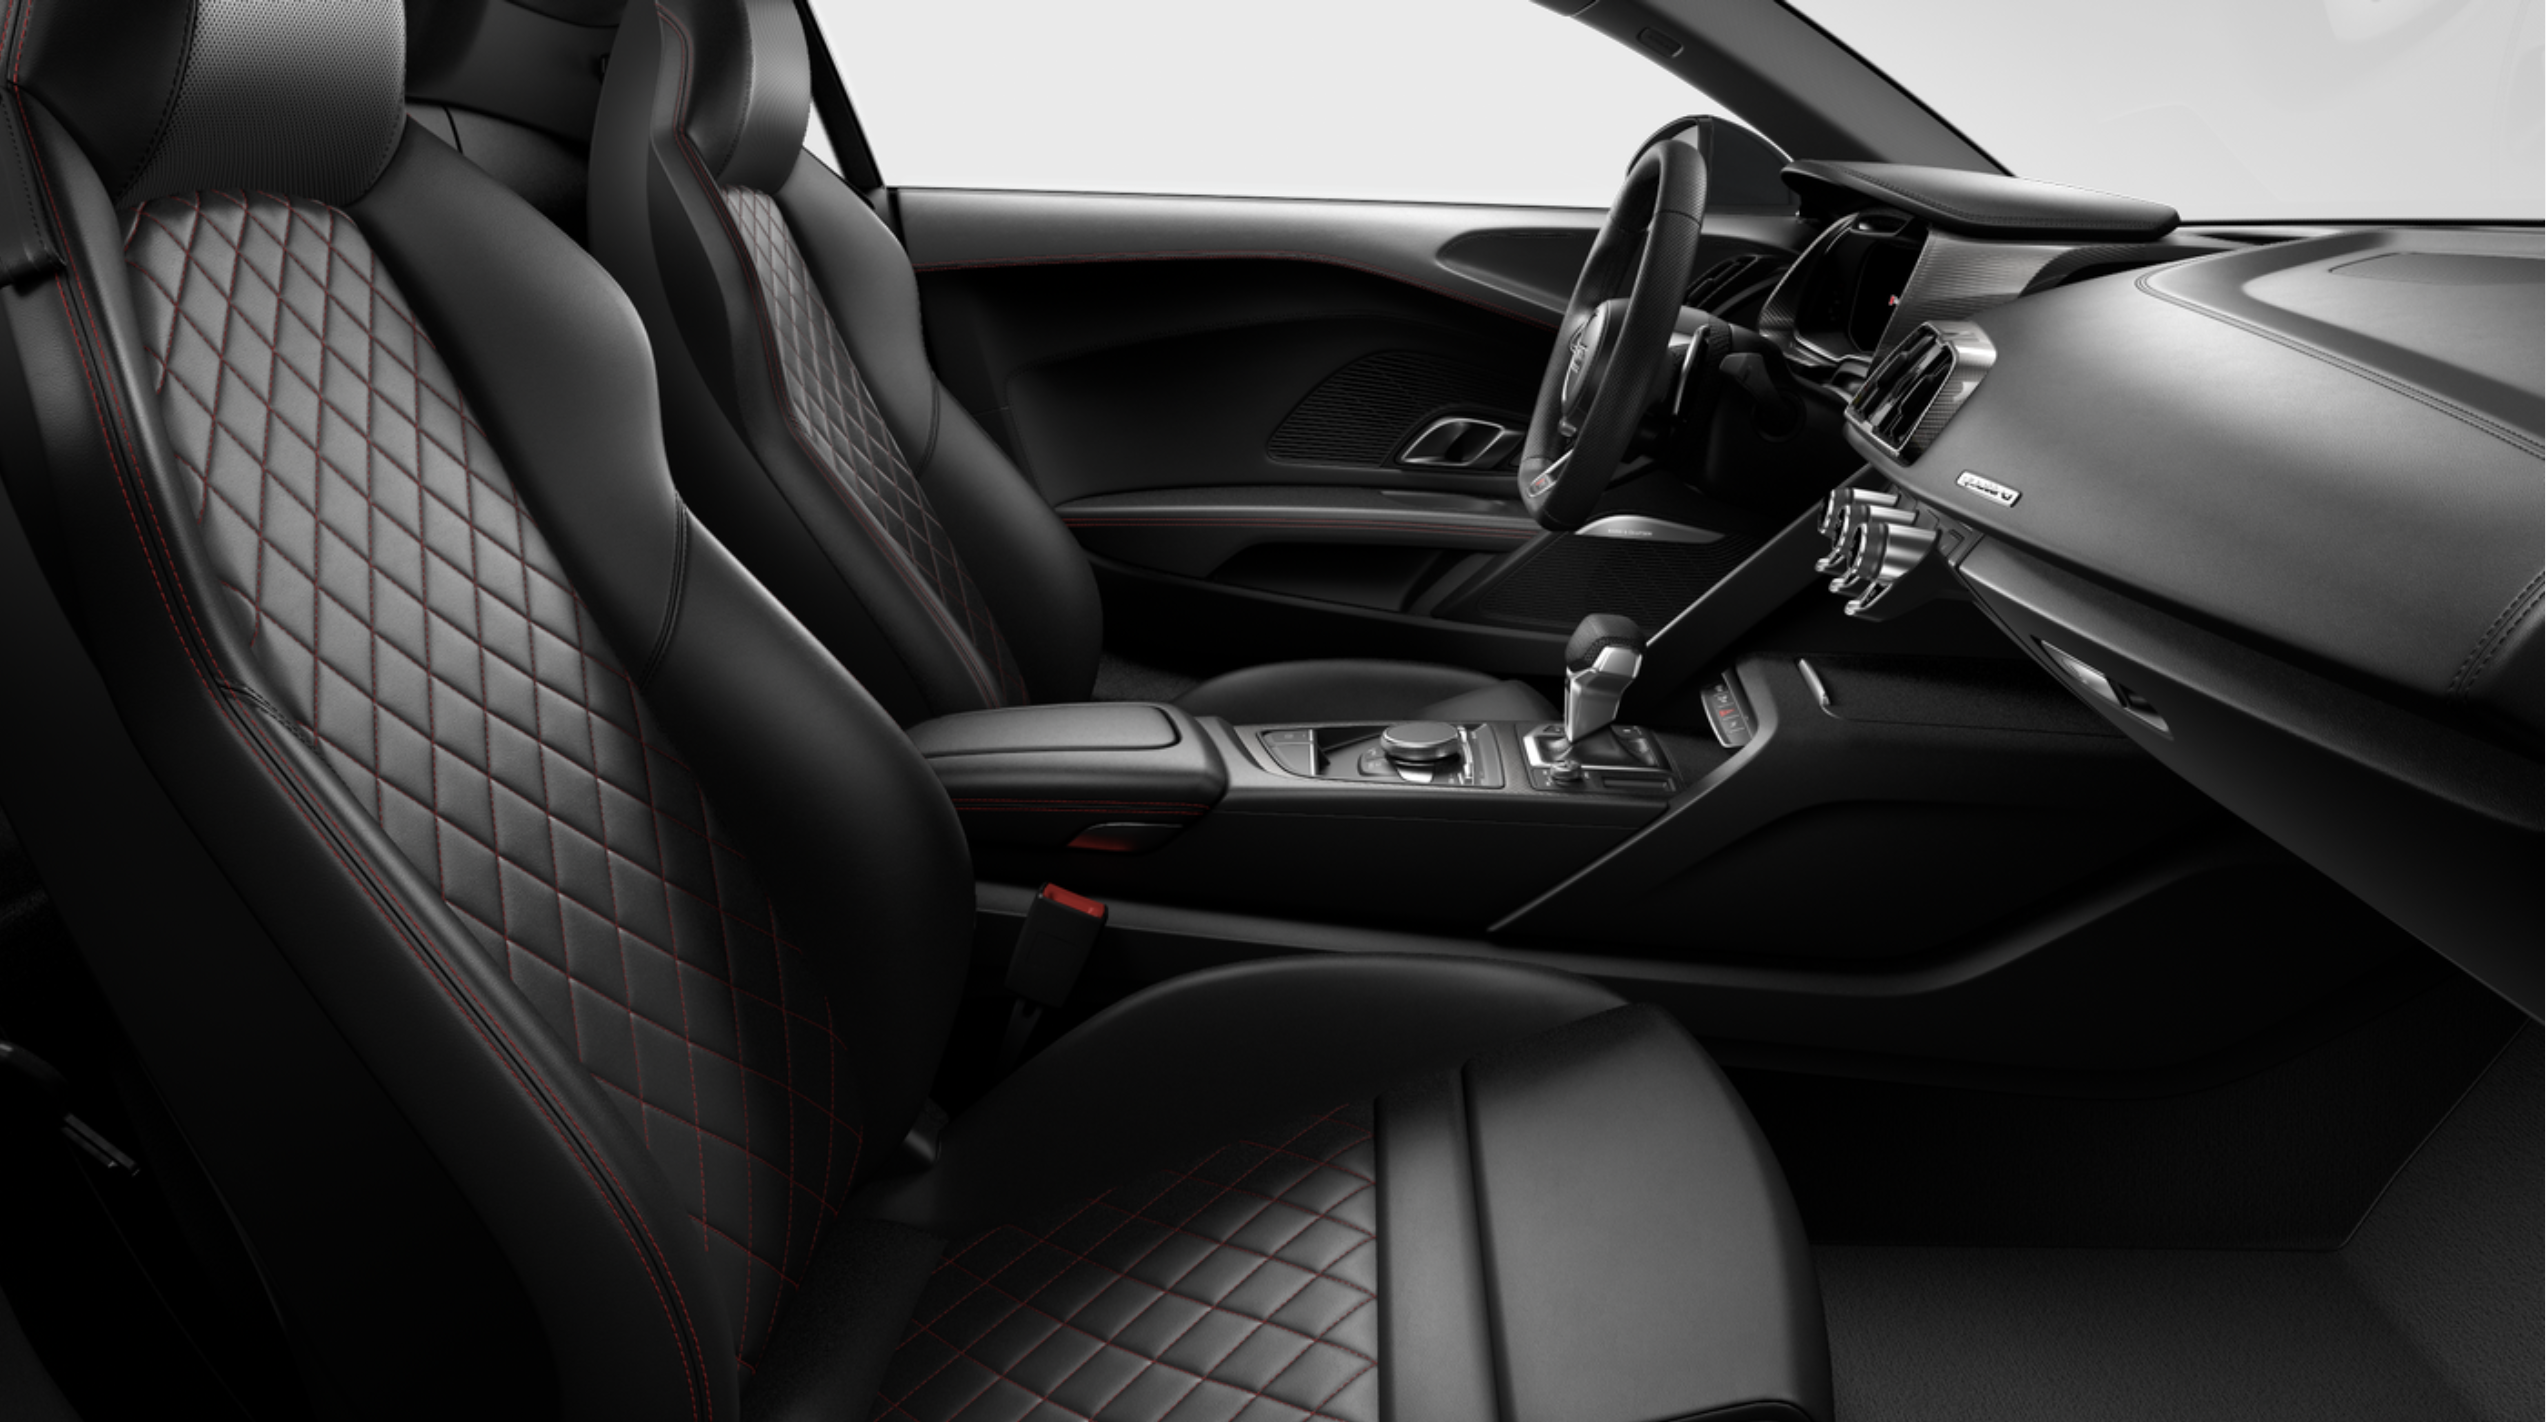 AUDI R8 coupé 5,2 FSI  V10 performance QUATTRO S-TRONIC - Audi exclusive | nové auto | ve výrobě | záruka | autoibuy.com | online nákup | online prodej | eshop